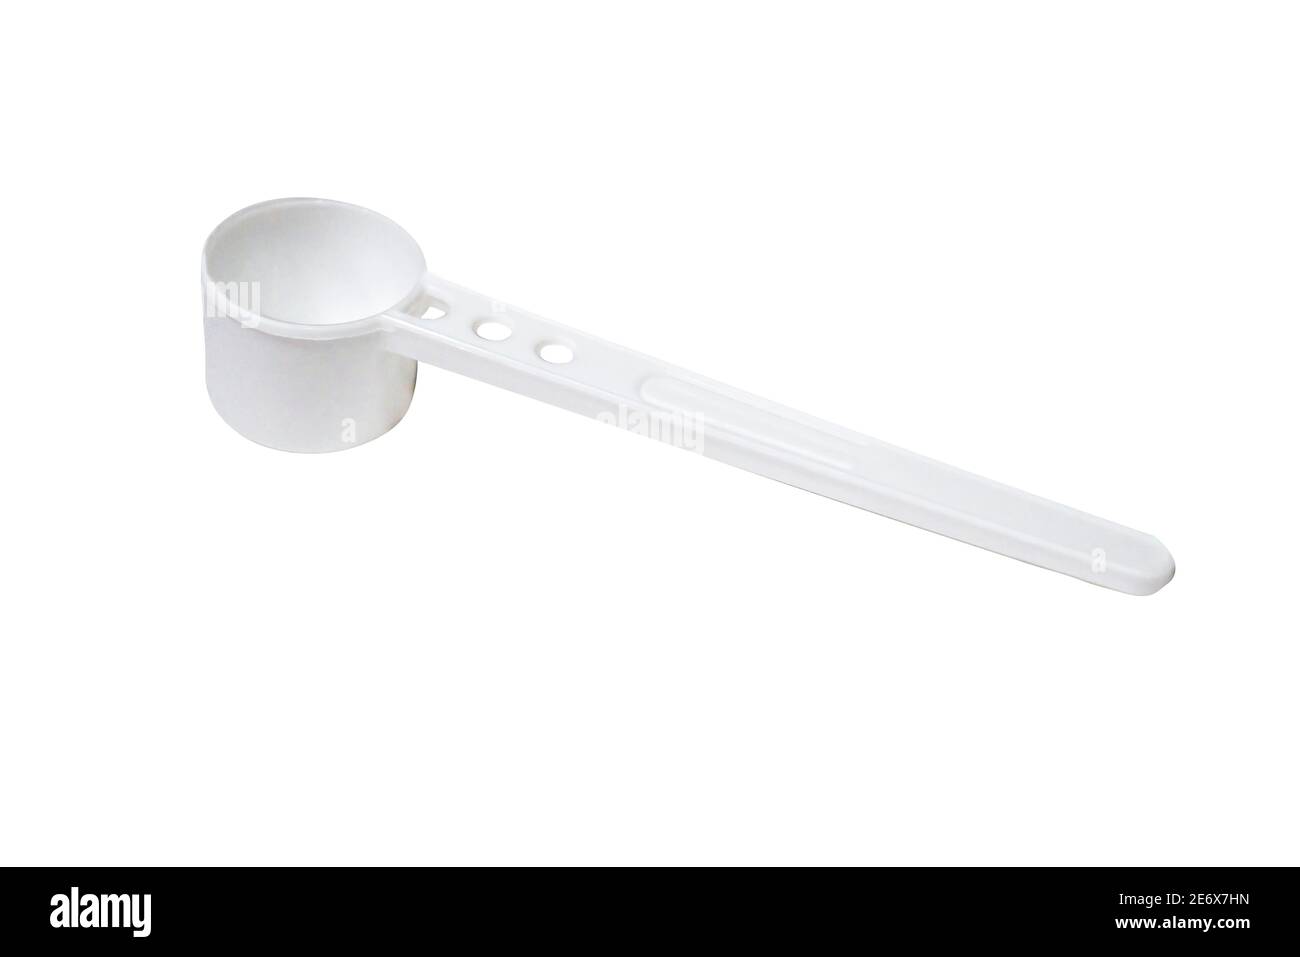 https://c8.alamy.com/comp/2E6X7HN/white-plastic-measuring-spoon-isolate-on-a-white-background-2E6X7HN.jpg